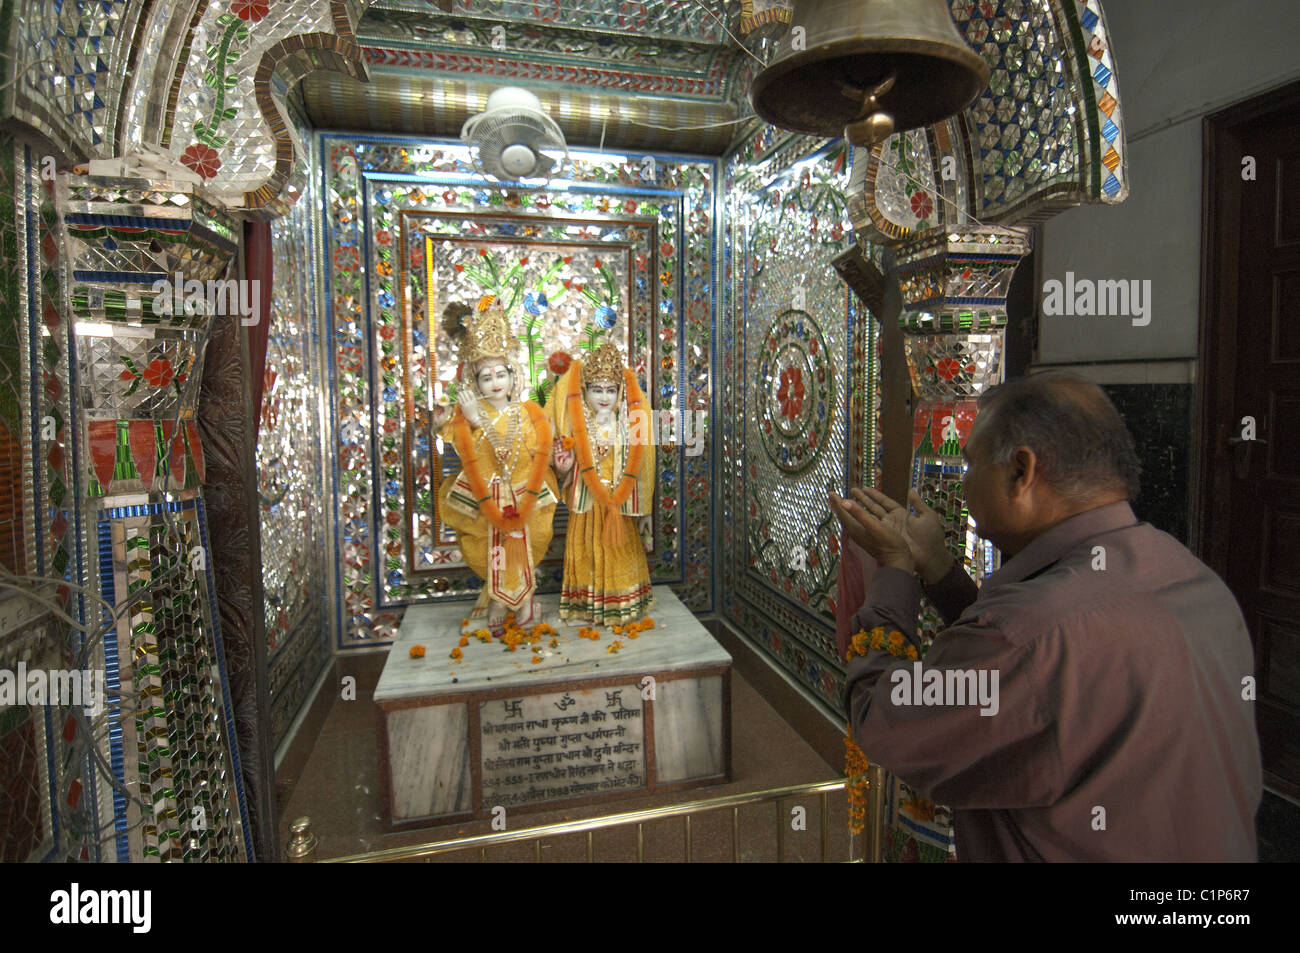 A man prays inside a religious temple in Ludhiana, Punjab, India. Stock Photo